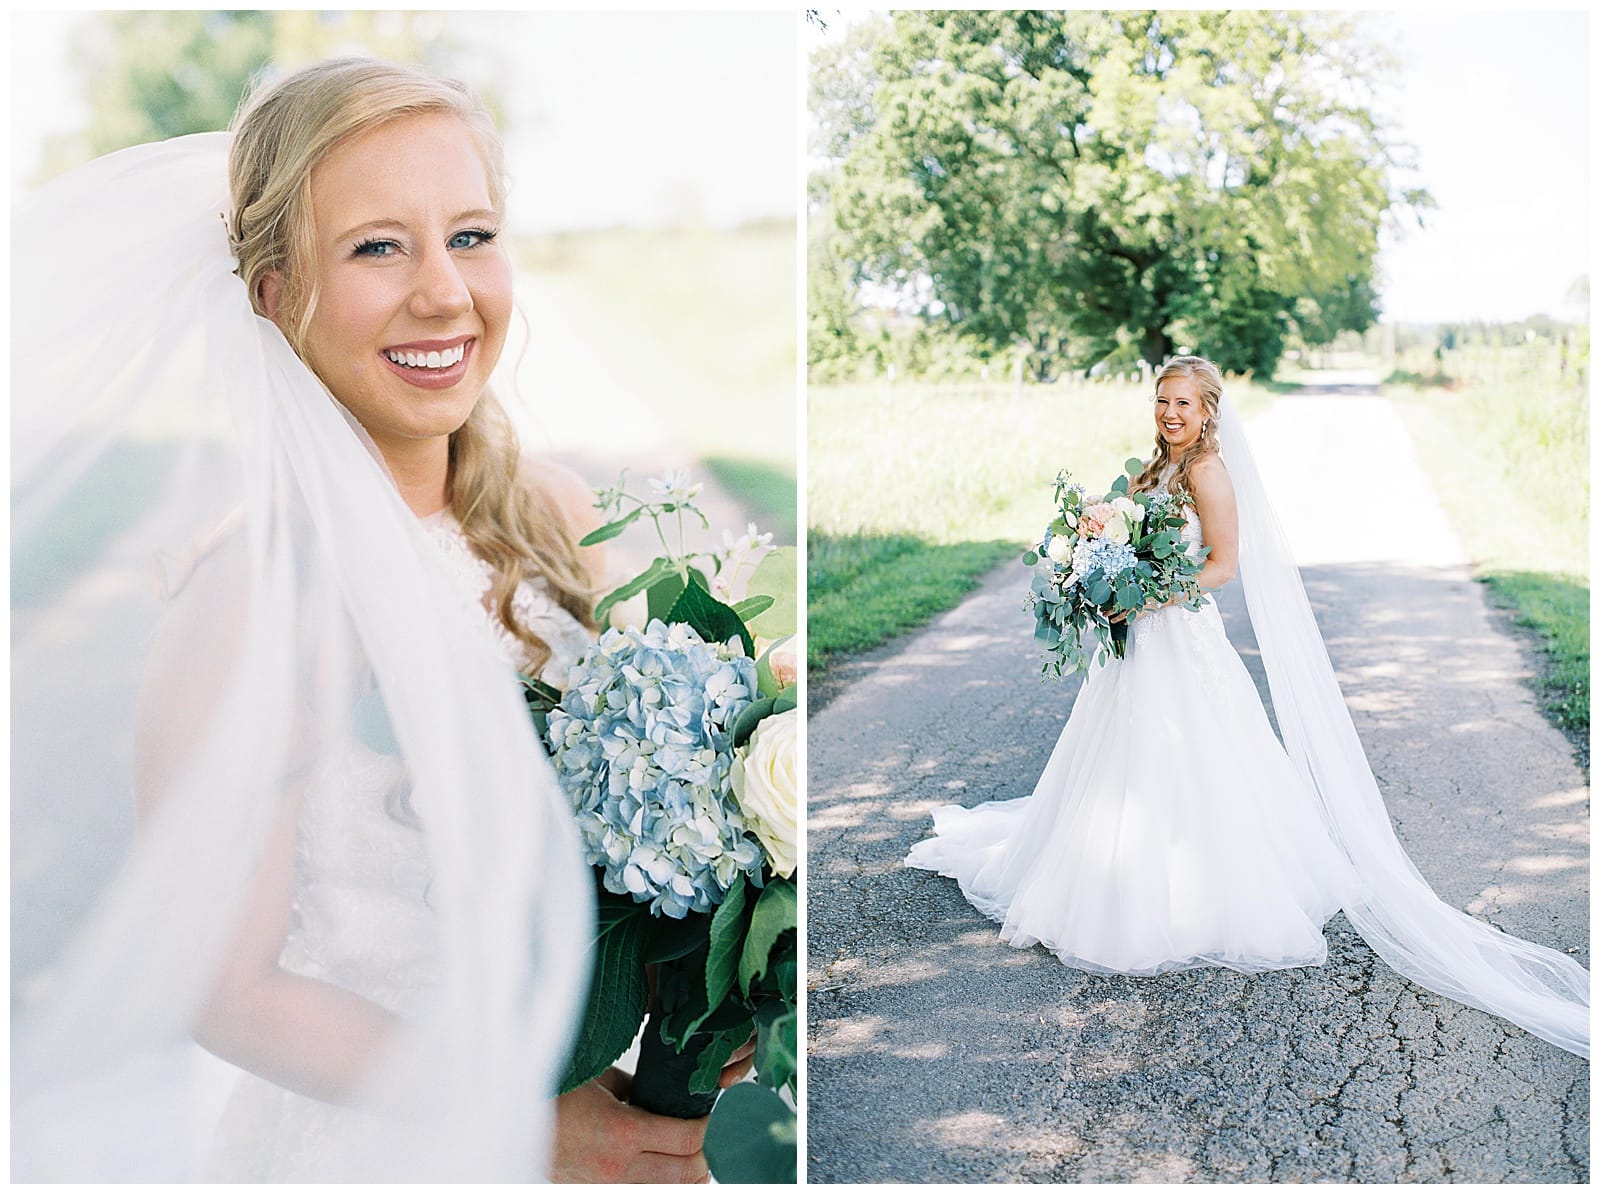 Danielle-Defayette-Photography-Farm-at-Bentley-Fields-Wedding-2020_0011.jpg